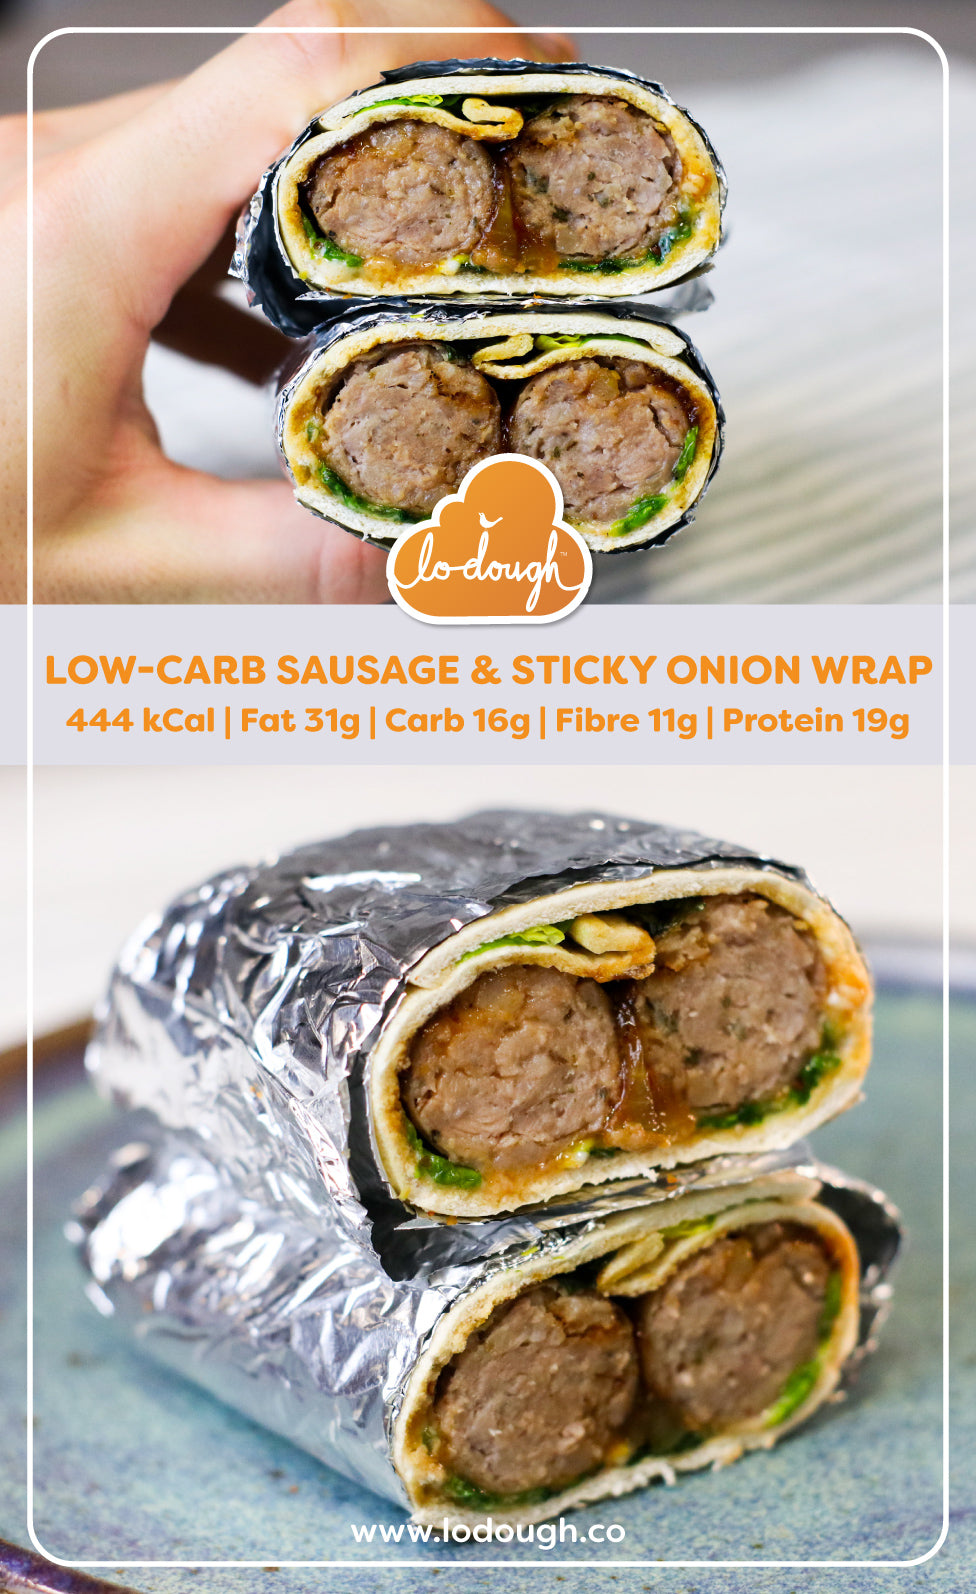 Low-Carb Sausage & Sticky Onion Wrap